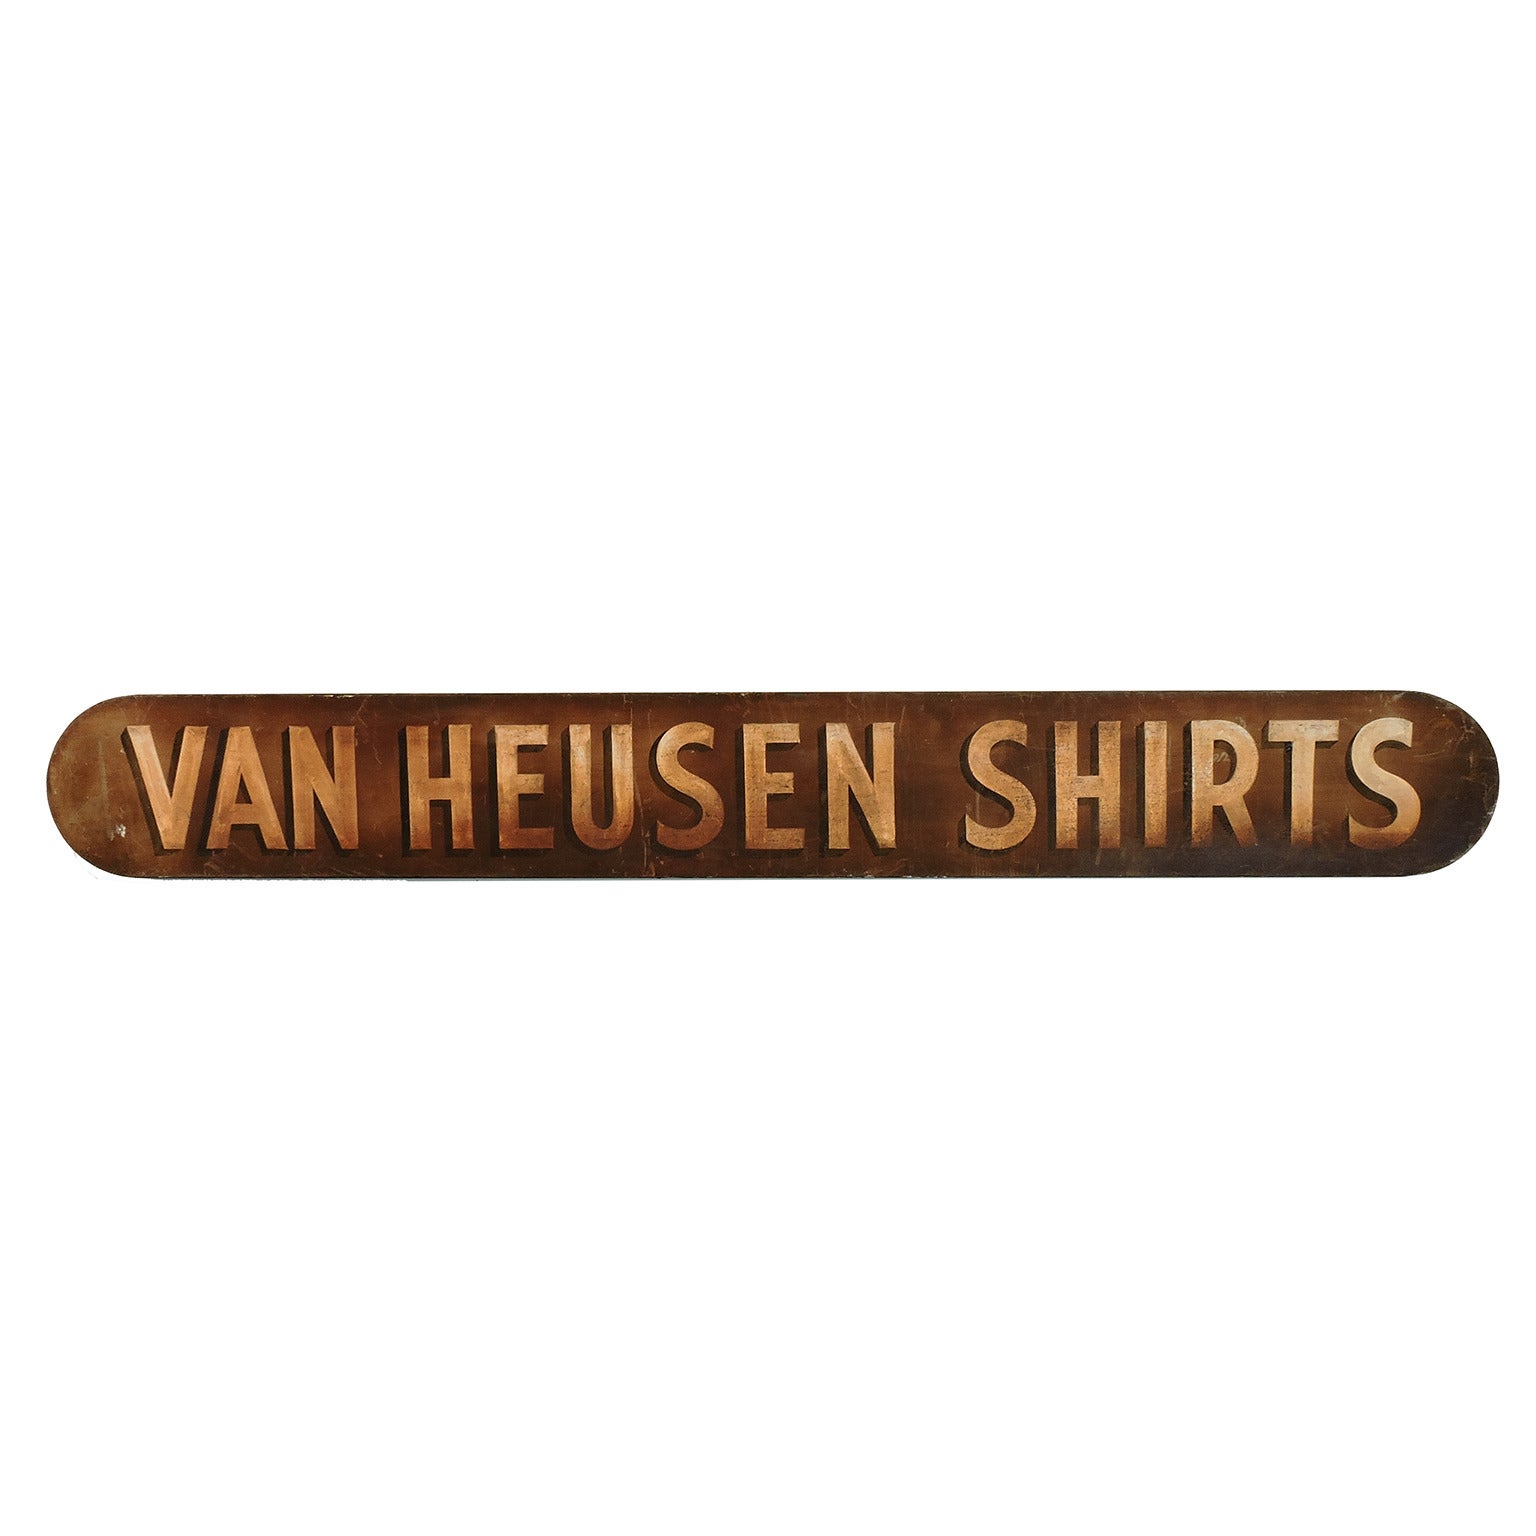 Vintage Van Heusen Shirts Advertising Sign For Sale